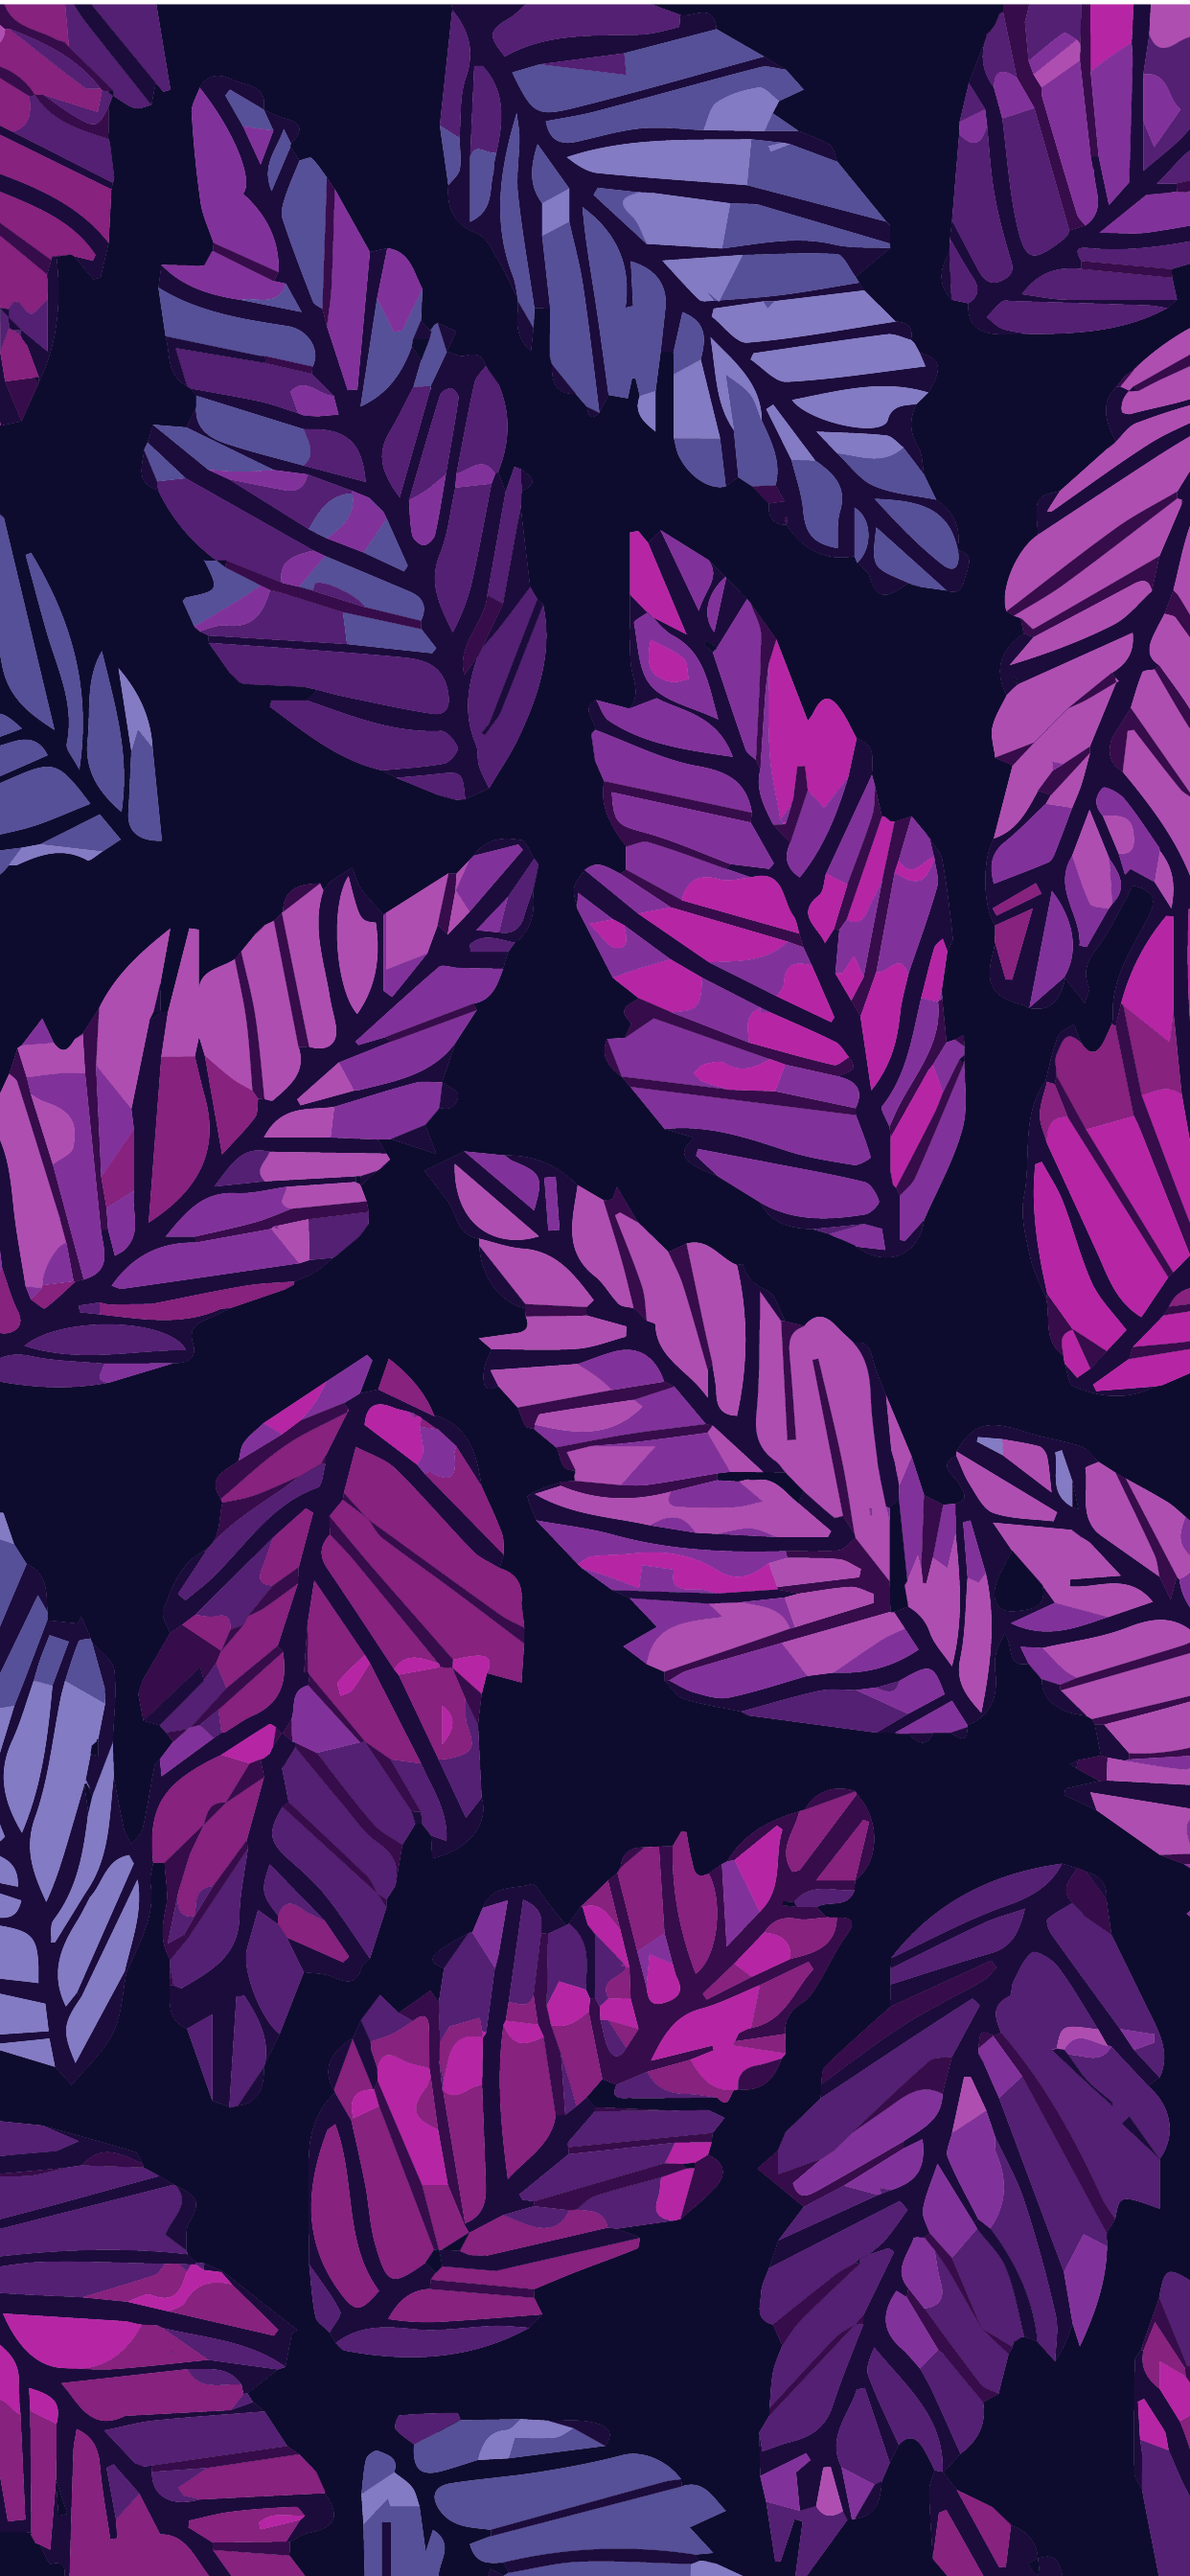 Seamless pattern with purple leaves on a dark background - Leaves, phone, dark phone, pattern, HD